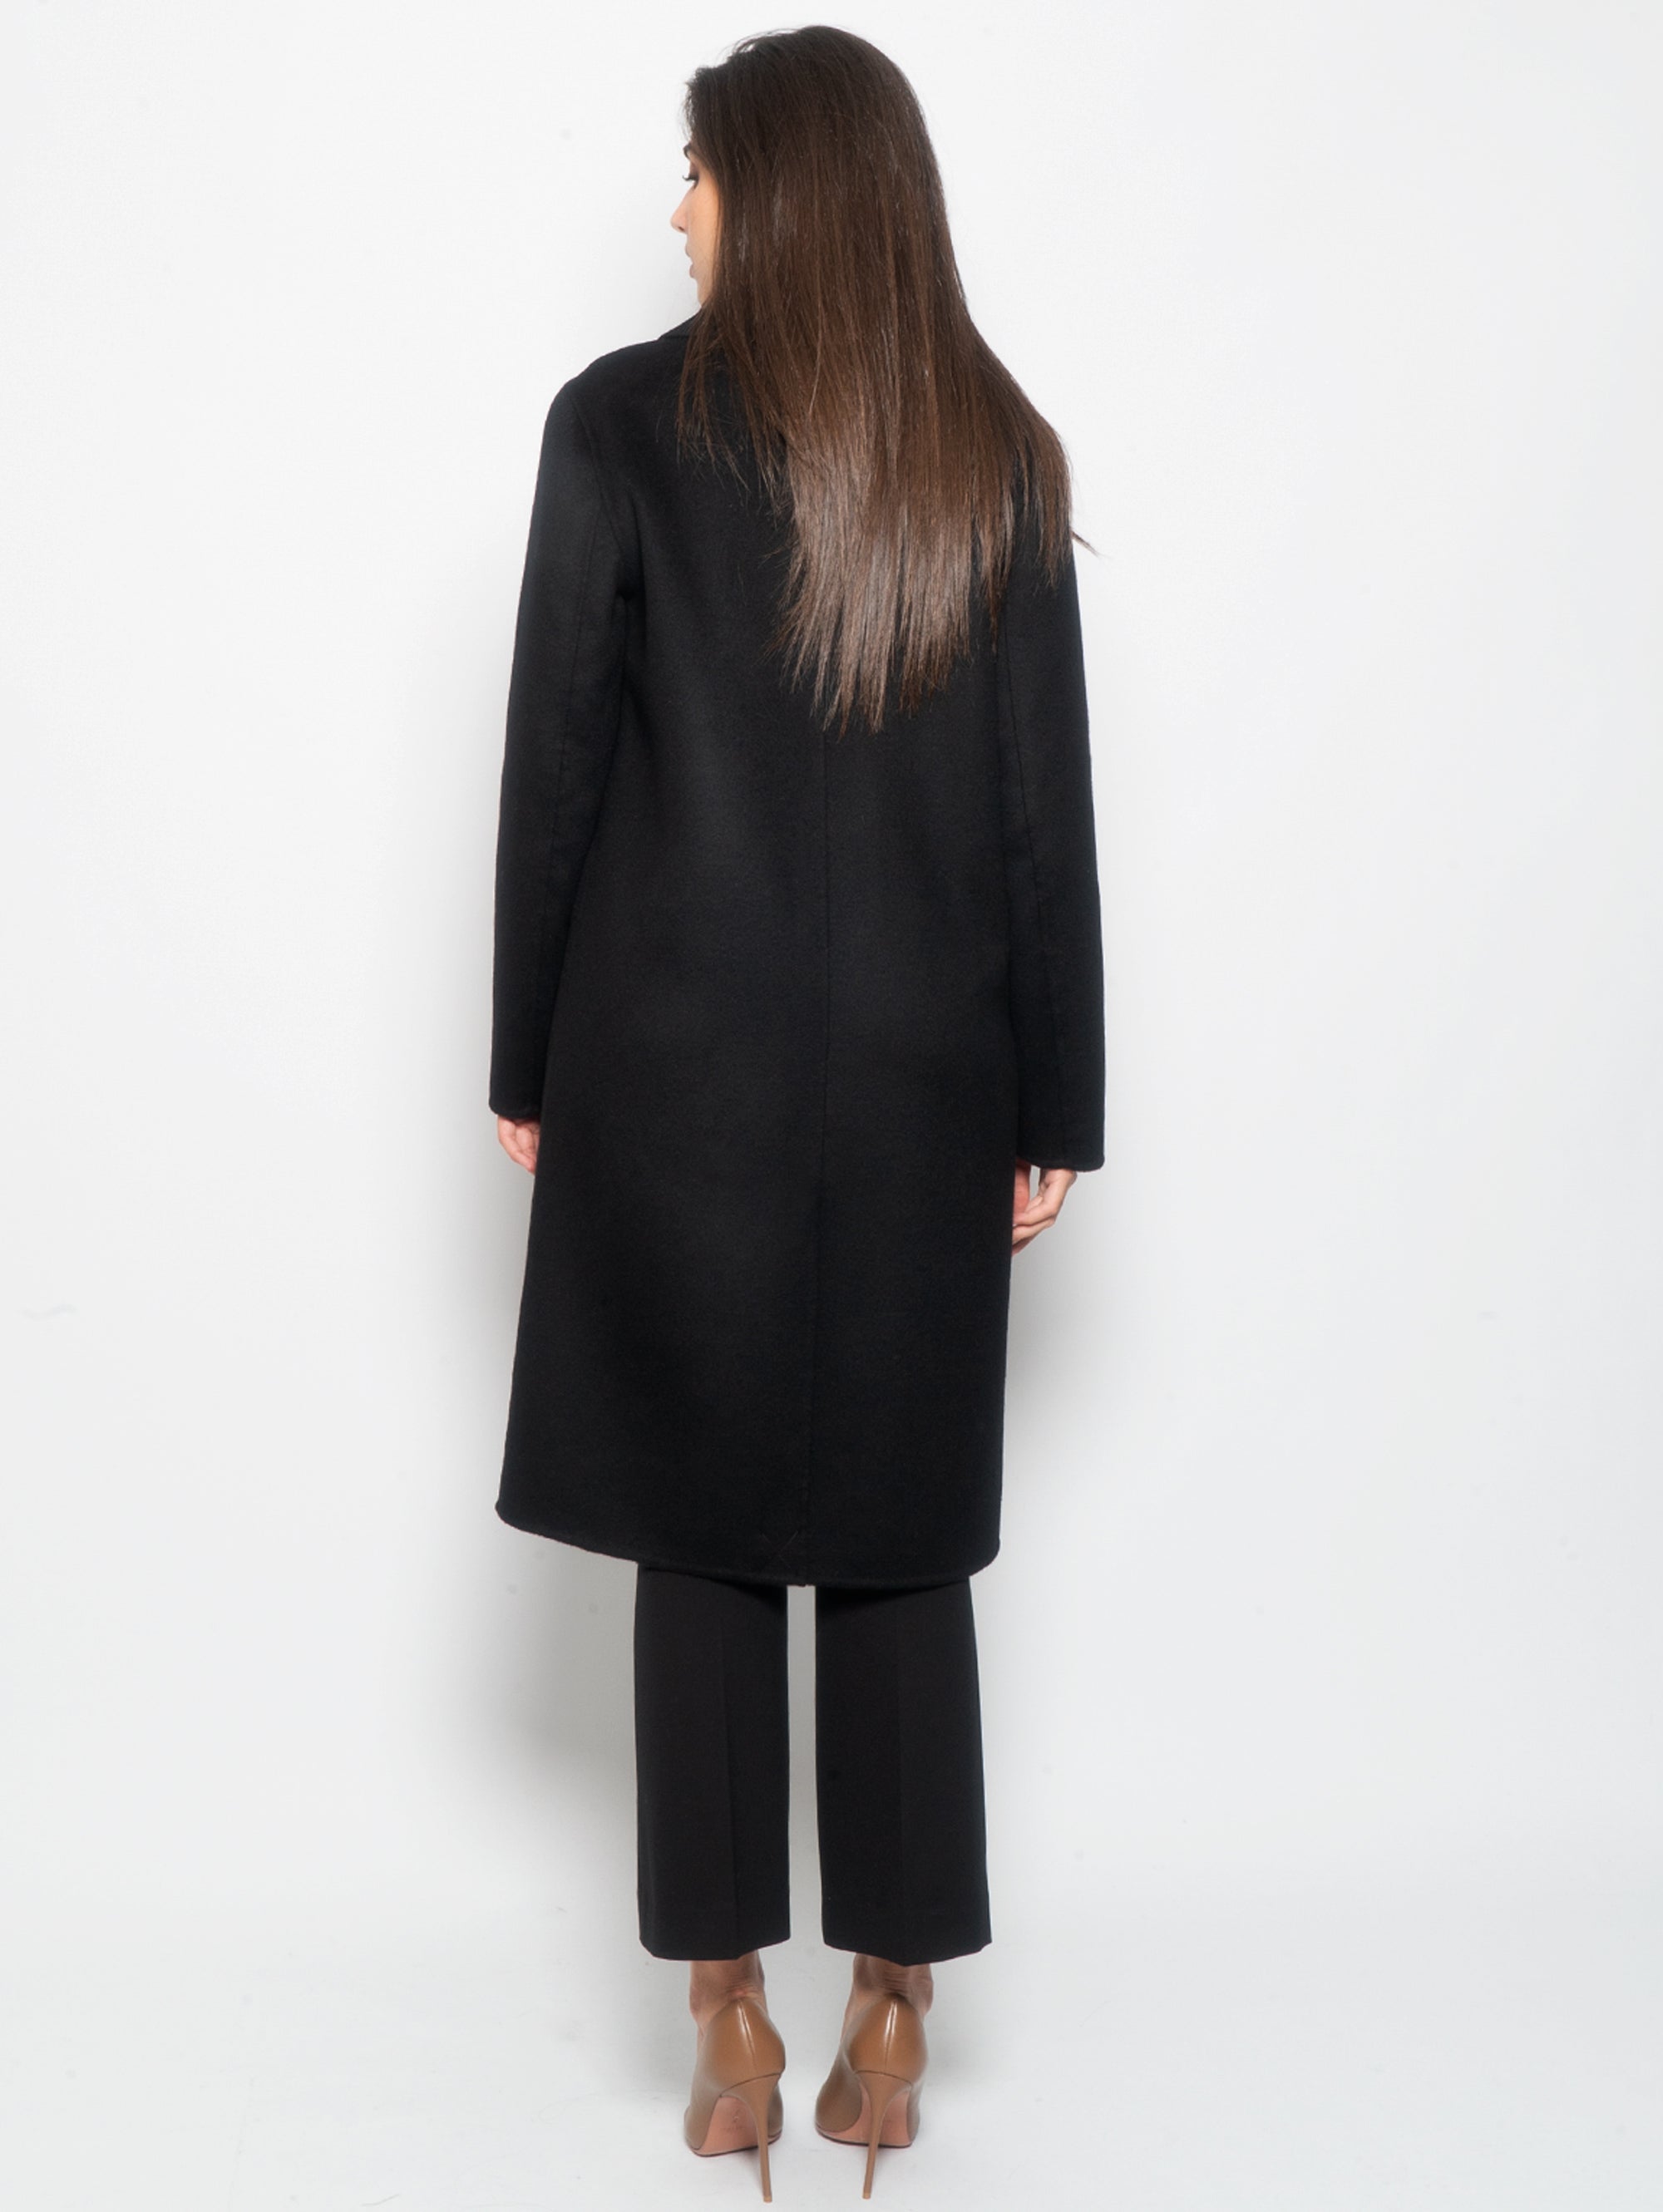 Single-breasted coat in black wool